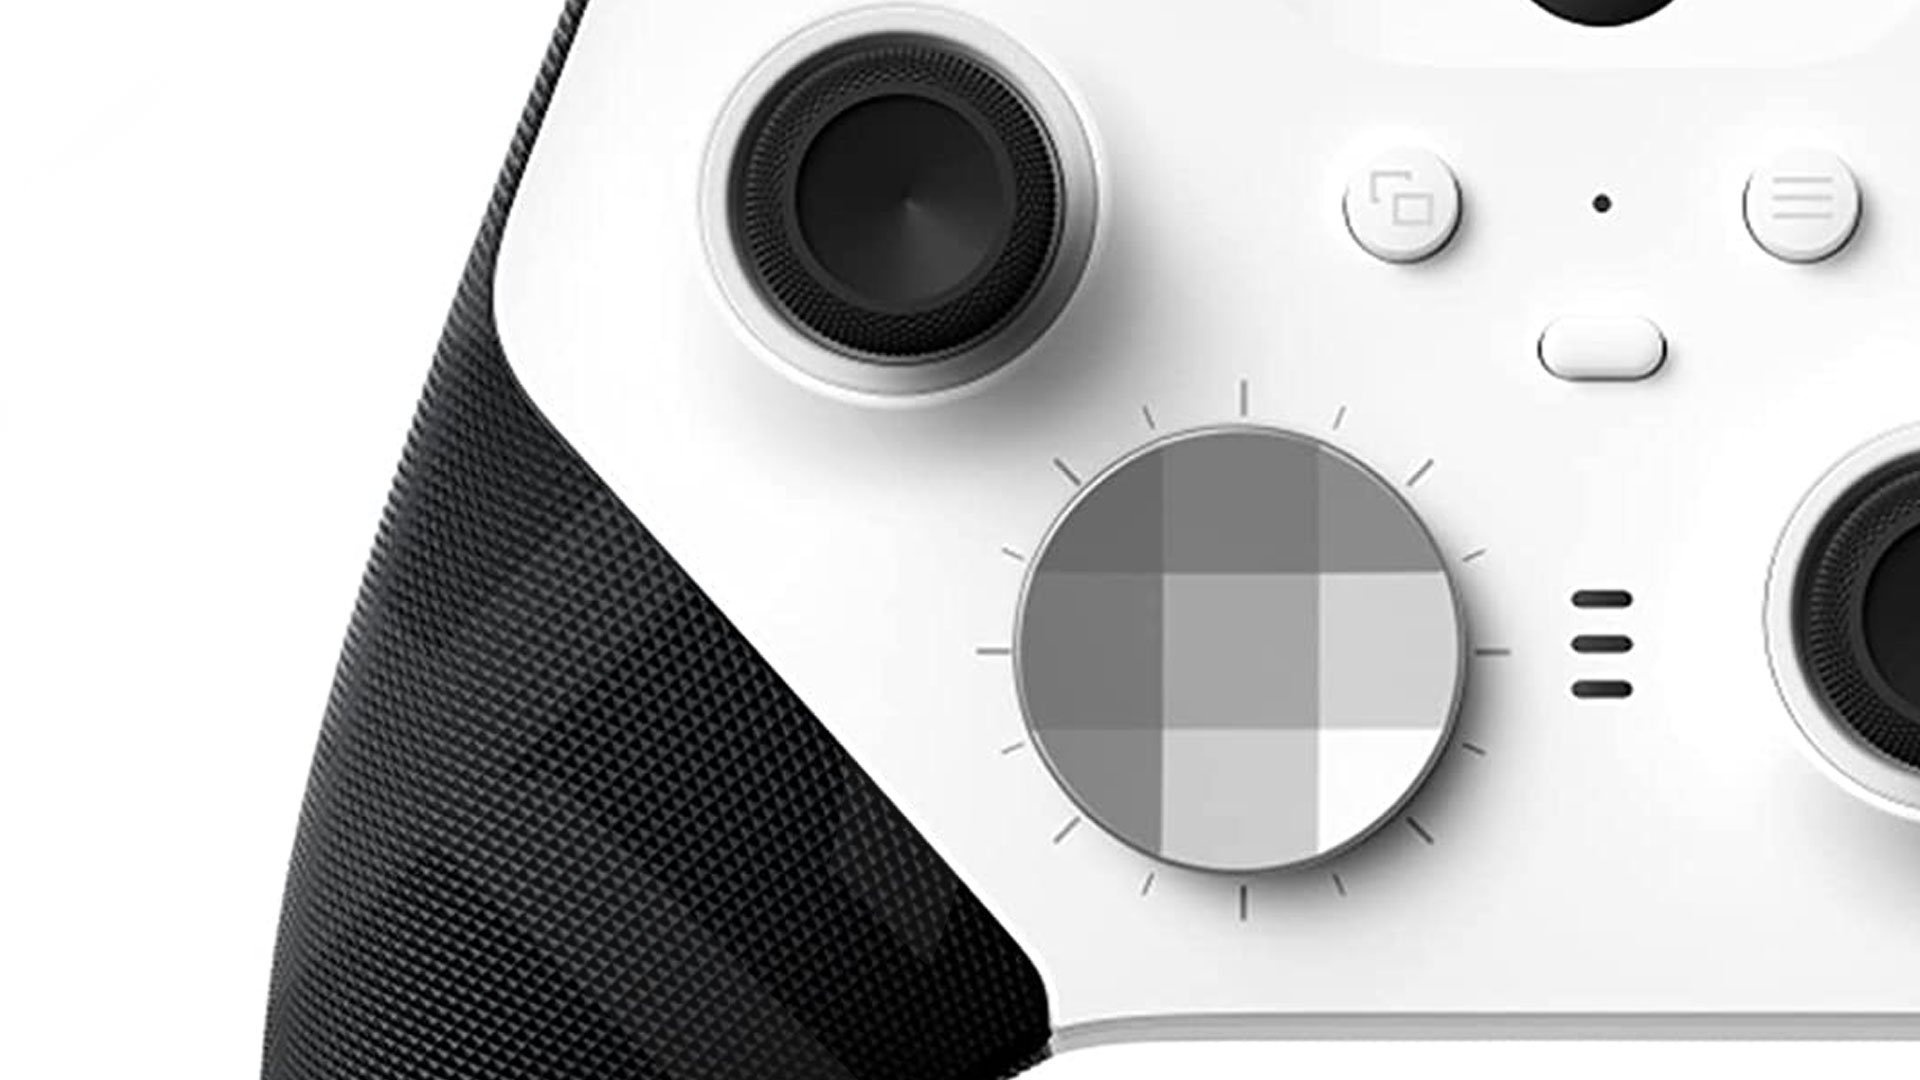 Joystick Microsoft Xbox Elite Wireless Series 2, Core, Inalámbrico  Bluetooth, Blanco/Negro